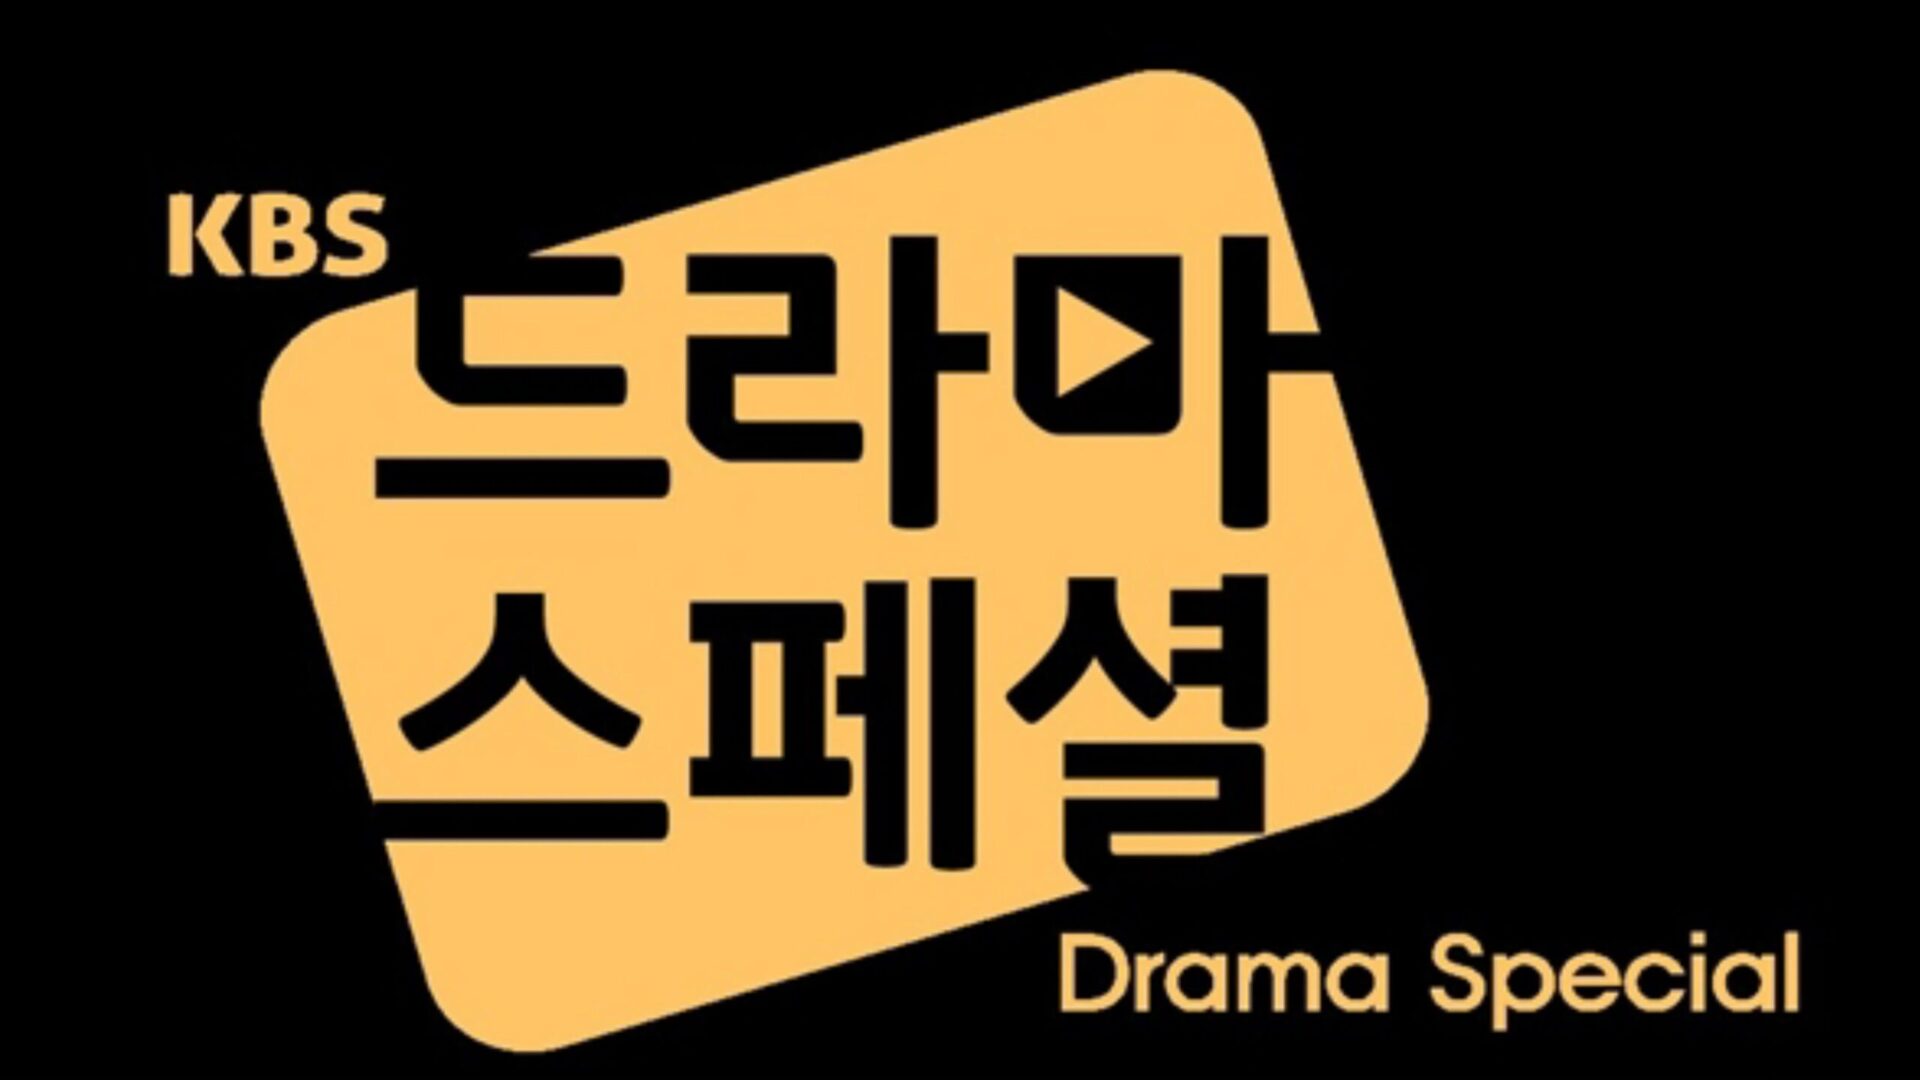 KBS Drama Special Logo